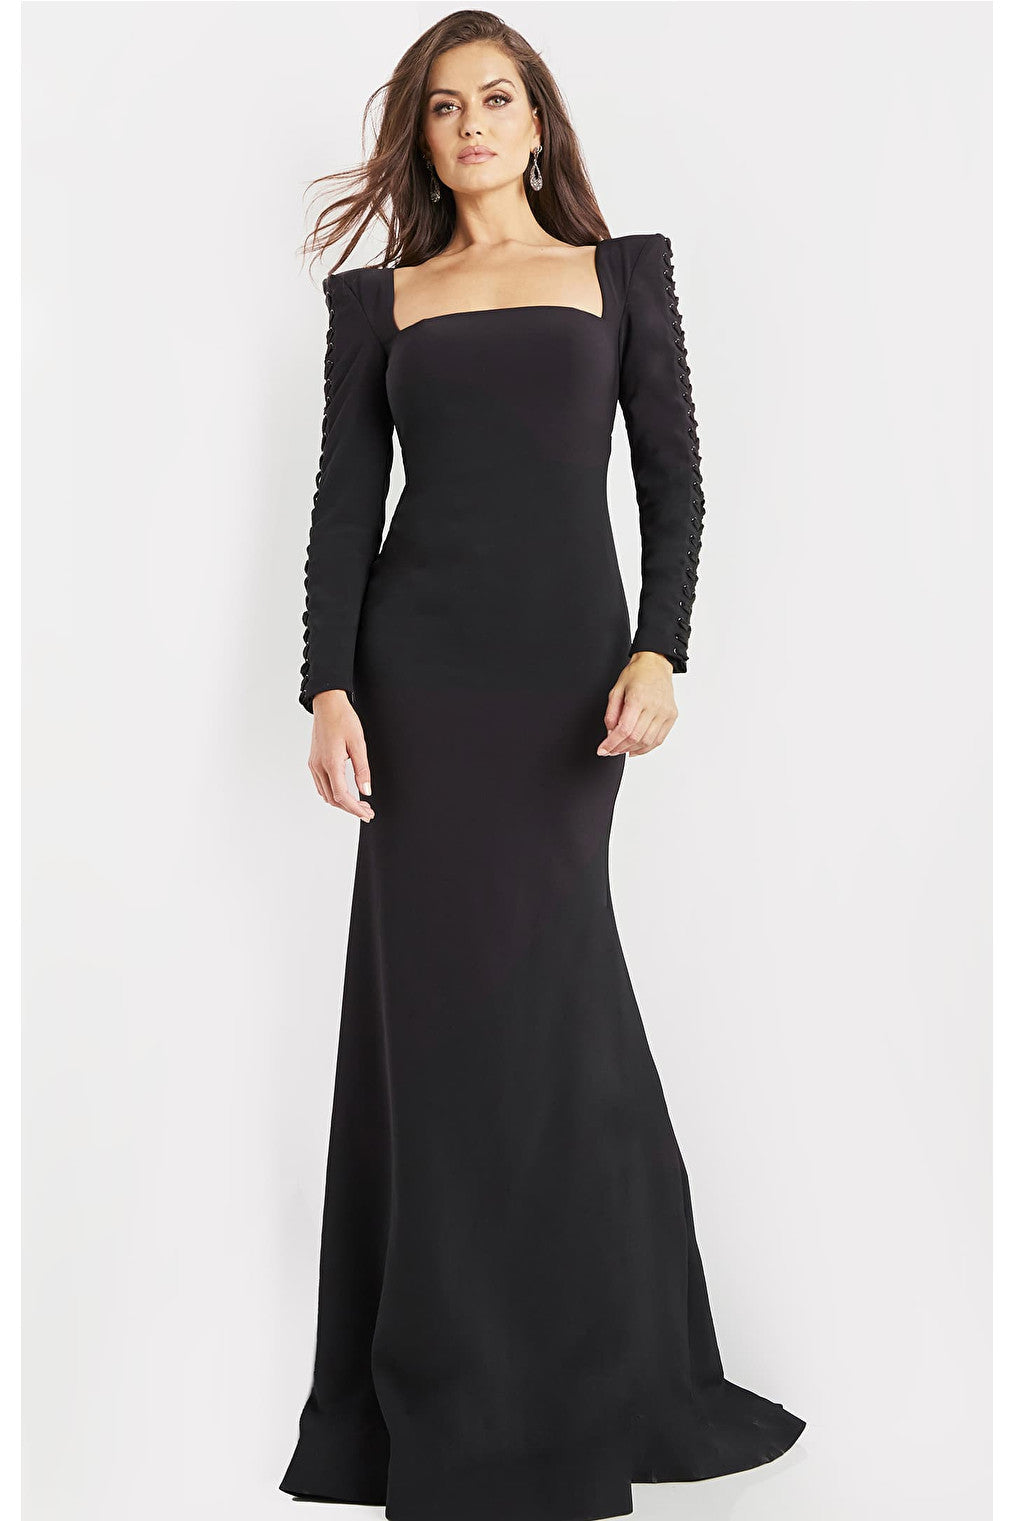 Long Sleeve Black Dress 09587